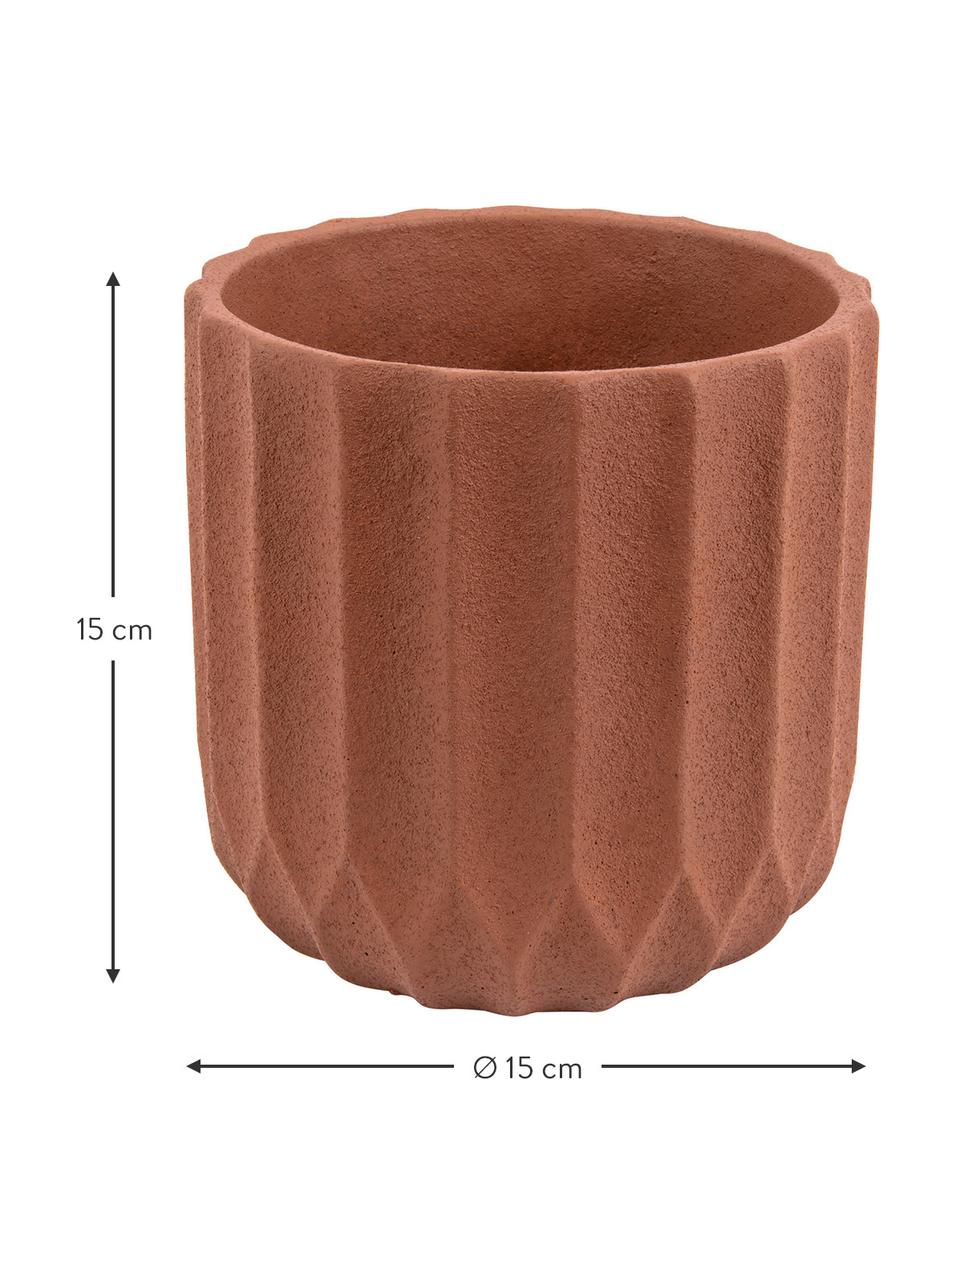 Übertopf Stripes aus Beton, Keramik, Braun, Ø 15 x H 15 cm